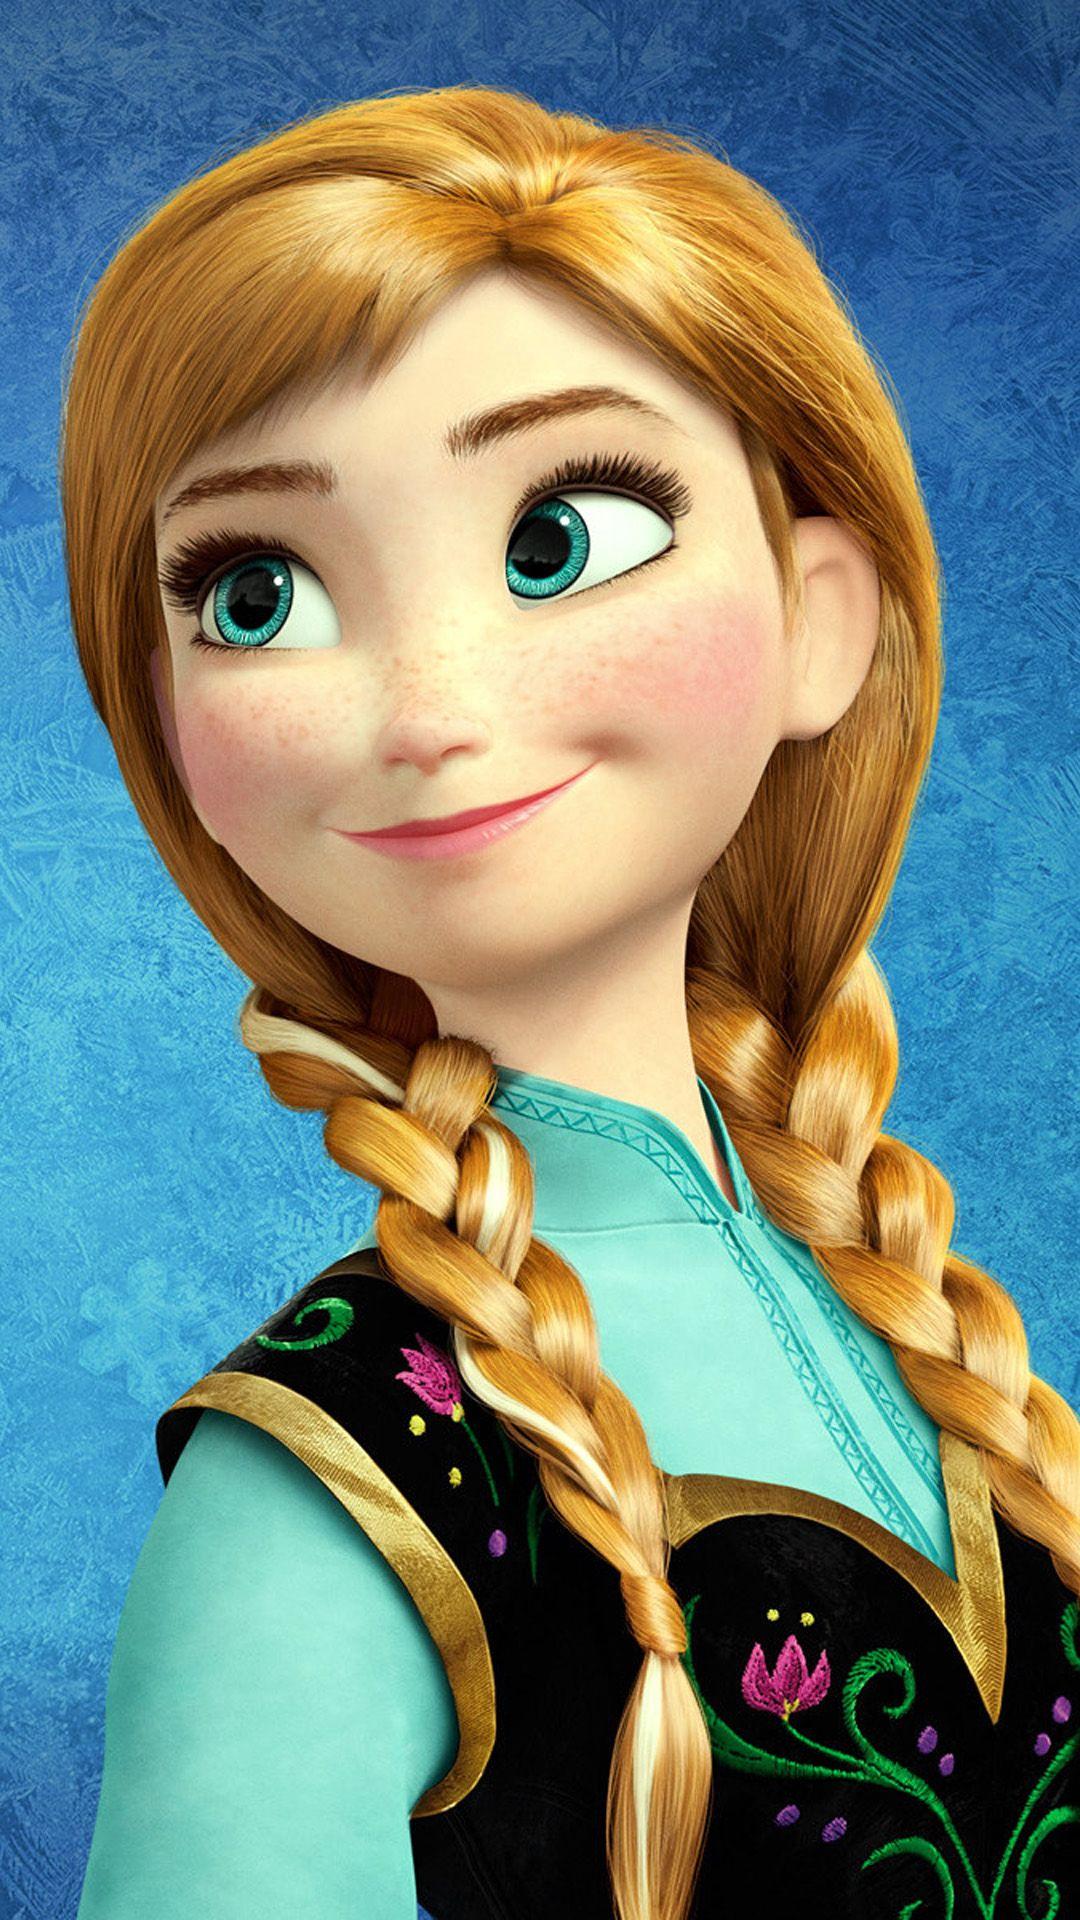 HD Disney Frozen Wallpaper For mobile phone 1080x1920. Wallpaper iphone disney princess, Frozen disney anna, Disney princess frozen